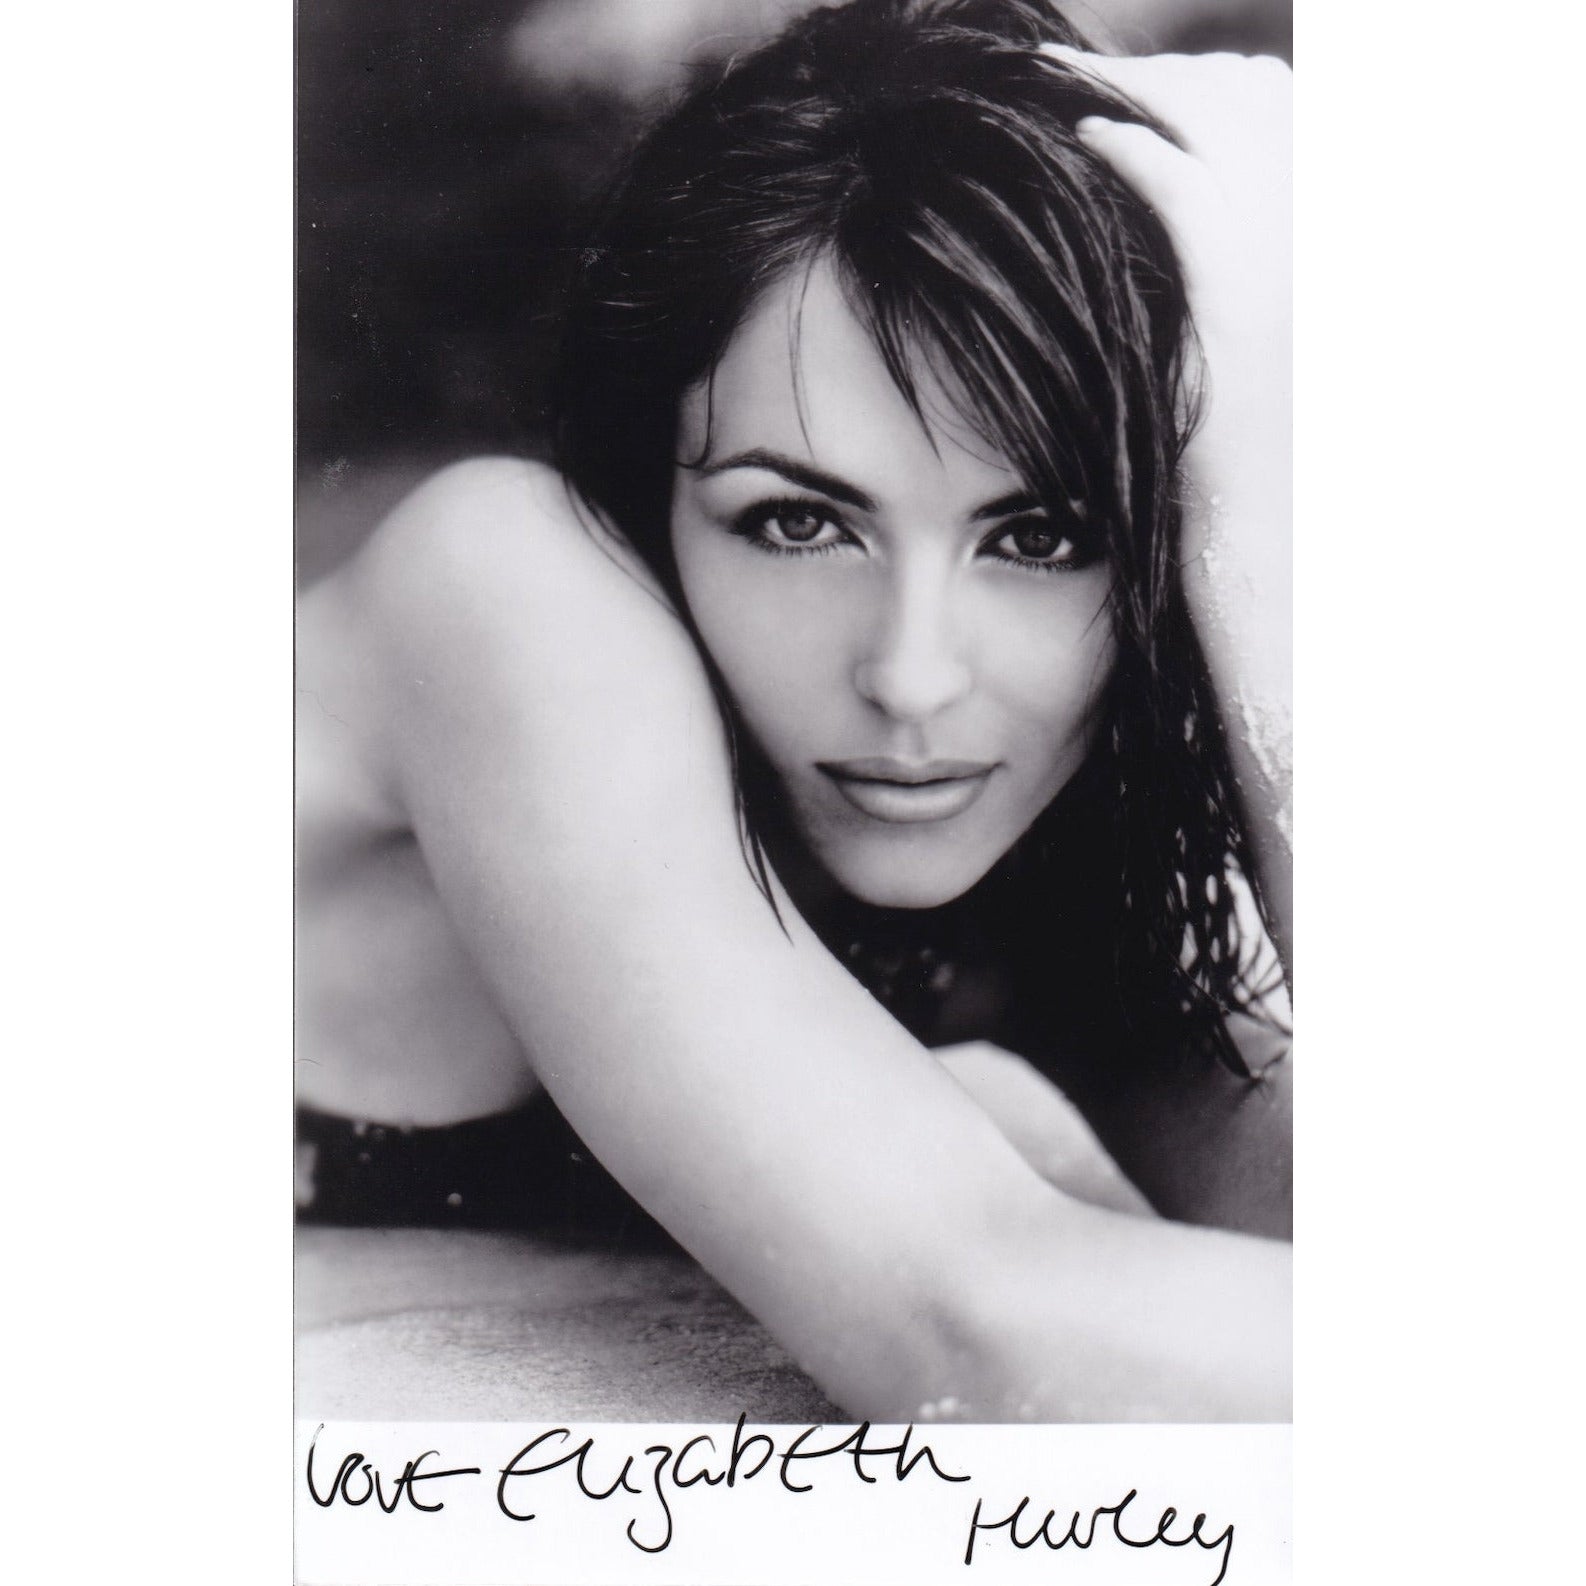 Elizabeth Hurley 6" x 4" signed photograph - The Memorabilia Club